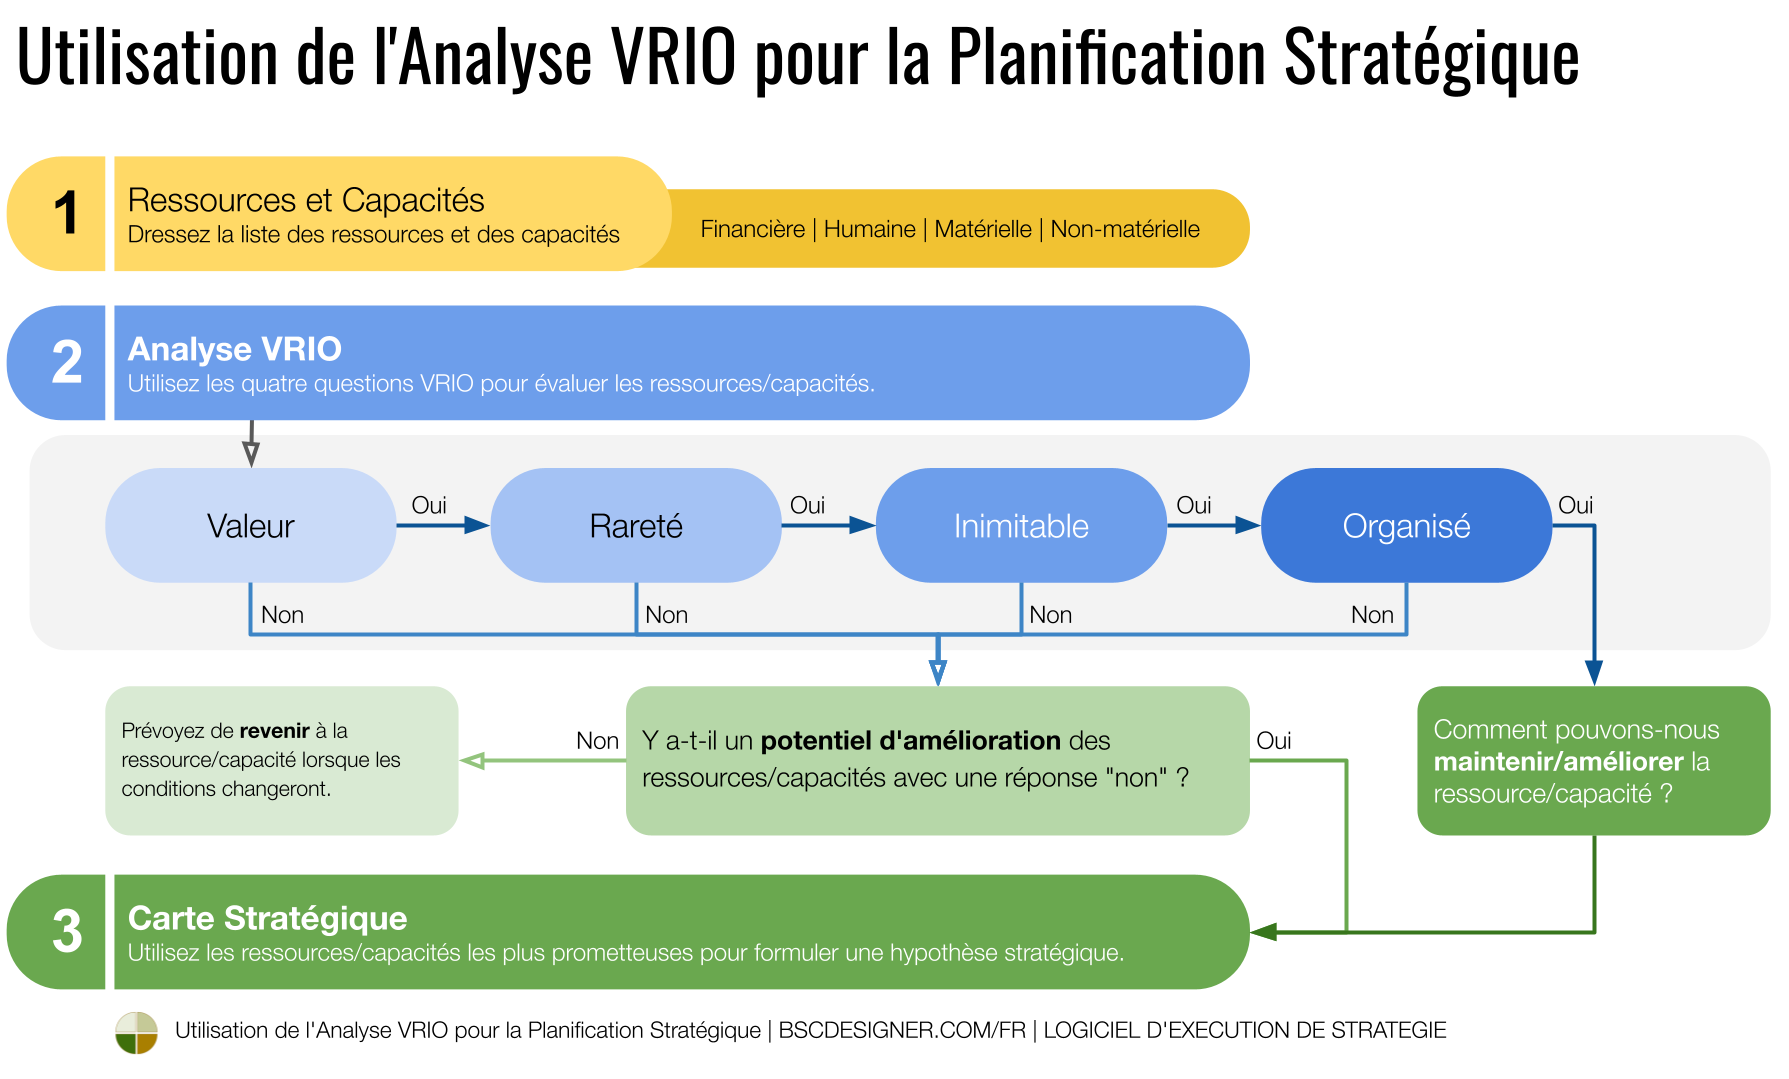 Using VRIO for strategic planning